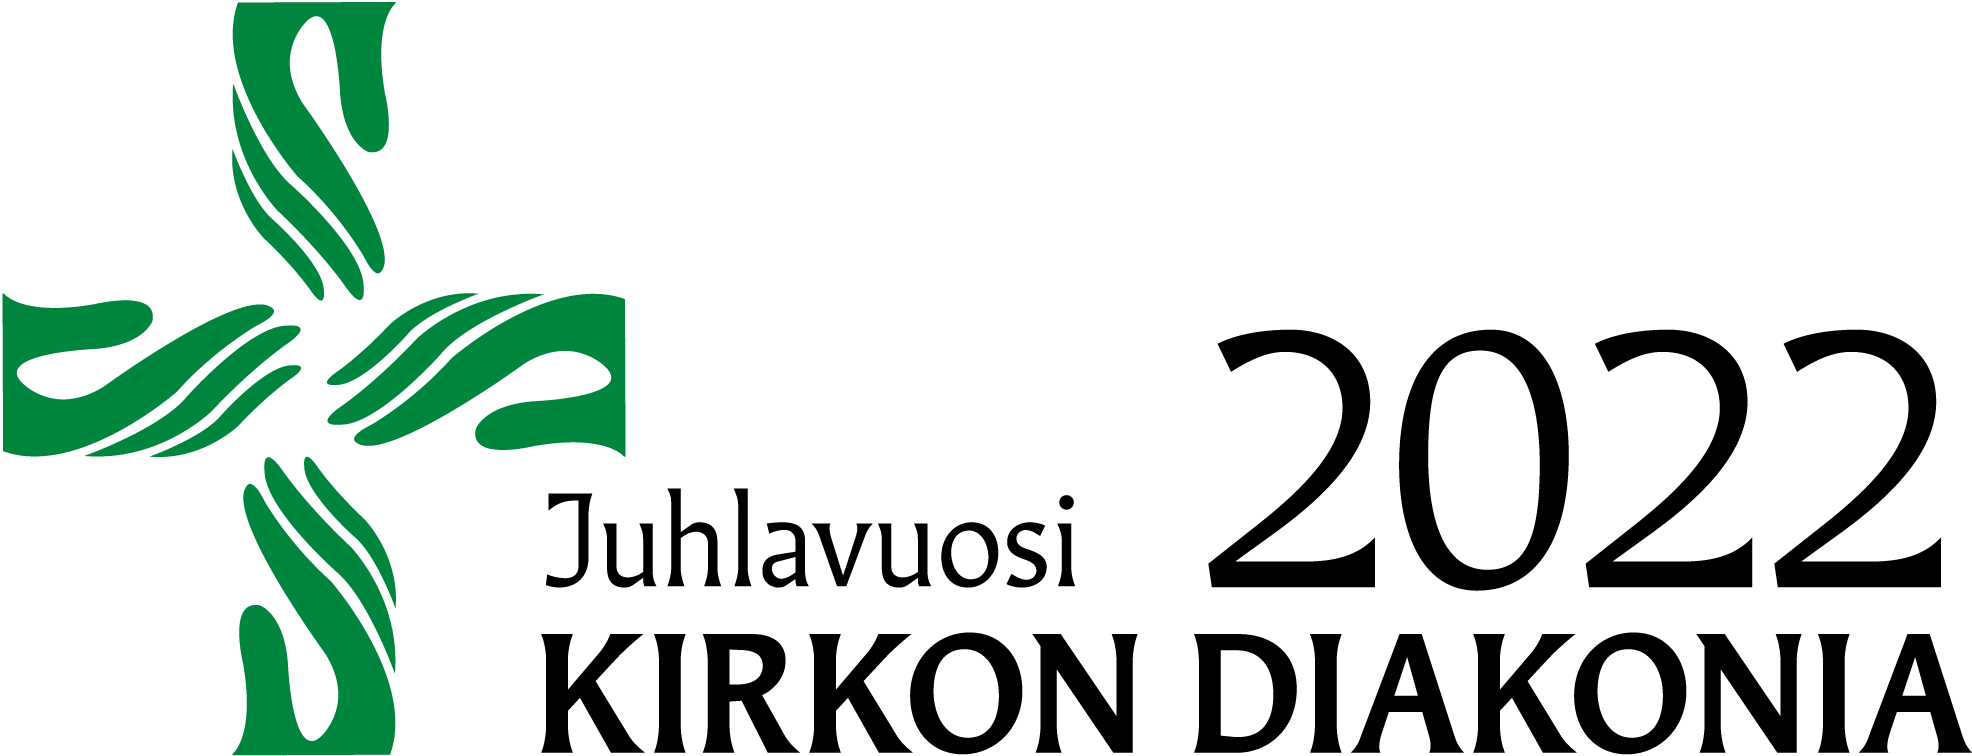 Diakonian juhlavuoden logo